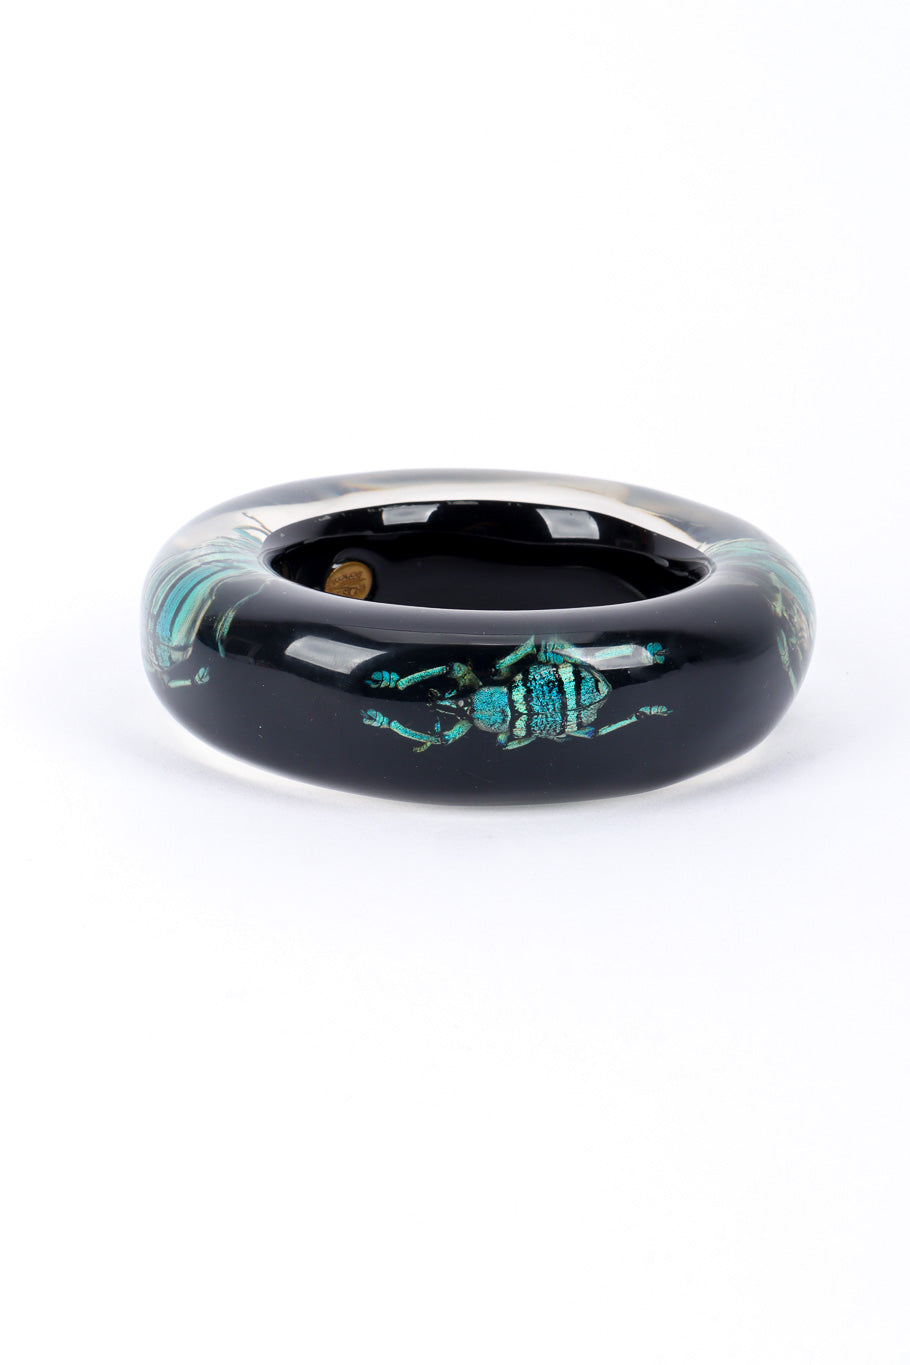 Kolos Designs Iridescent Beetle Lucite Cuff I front @recessla